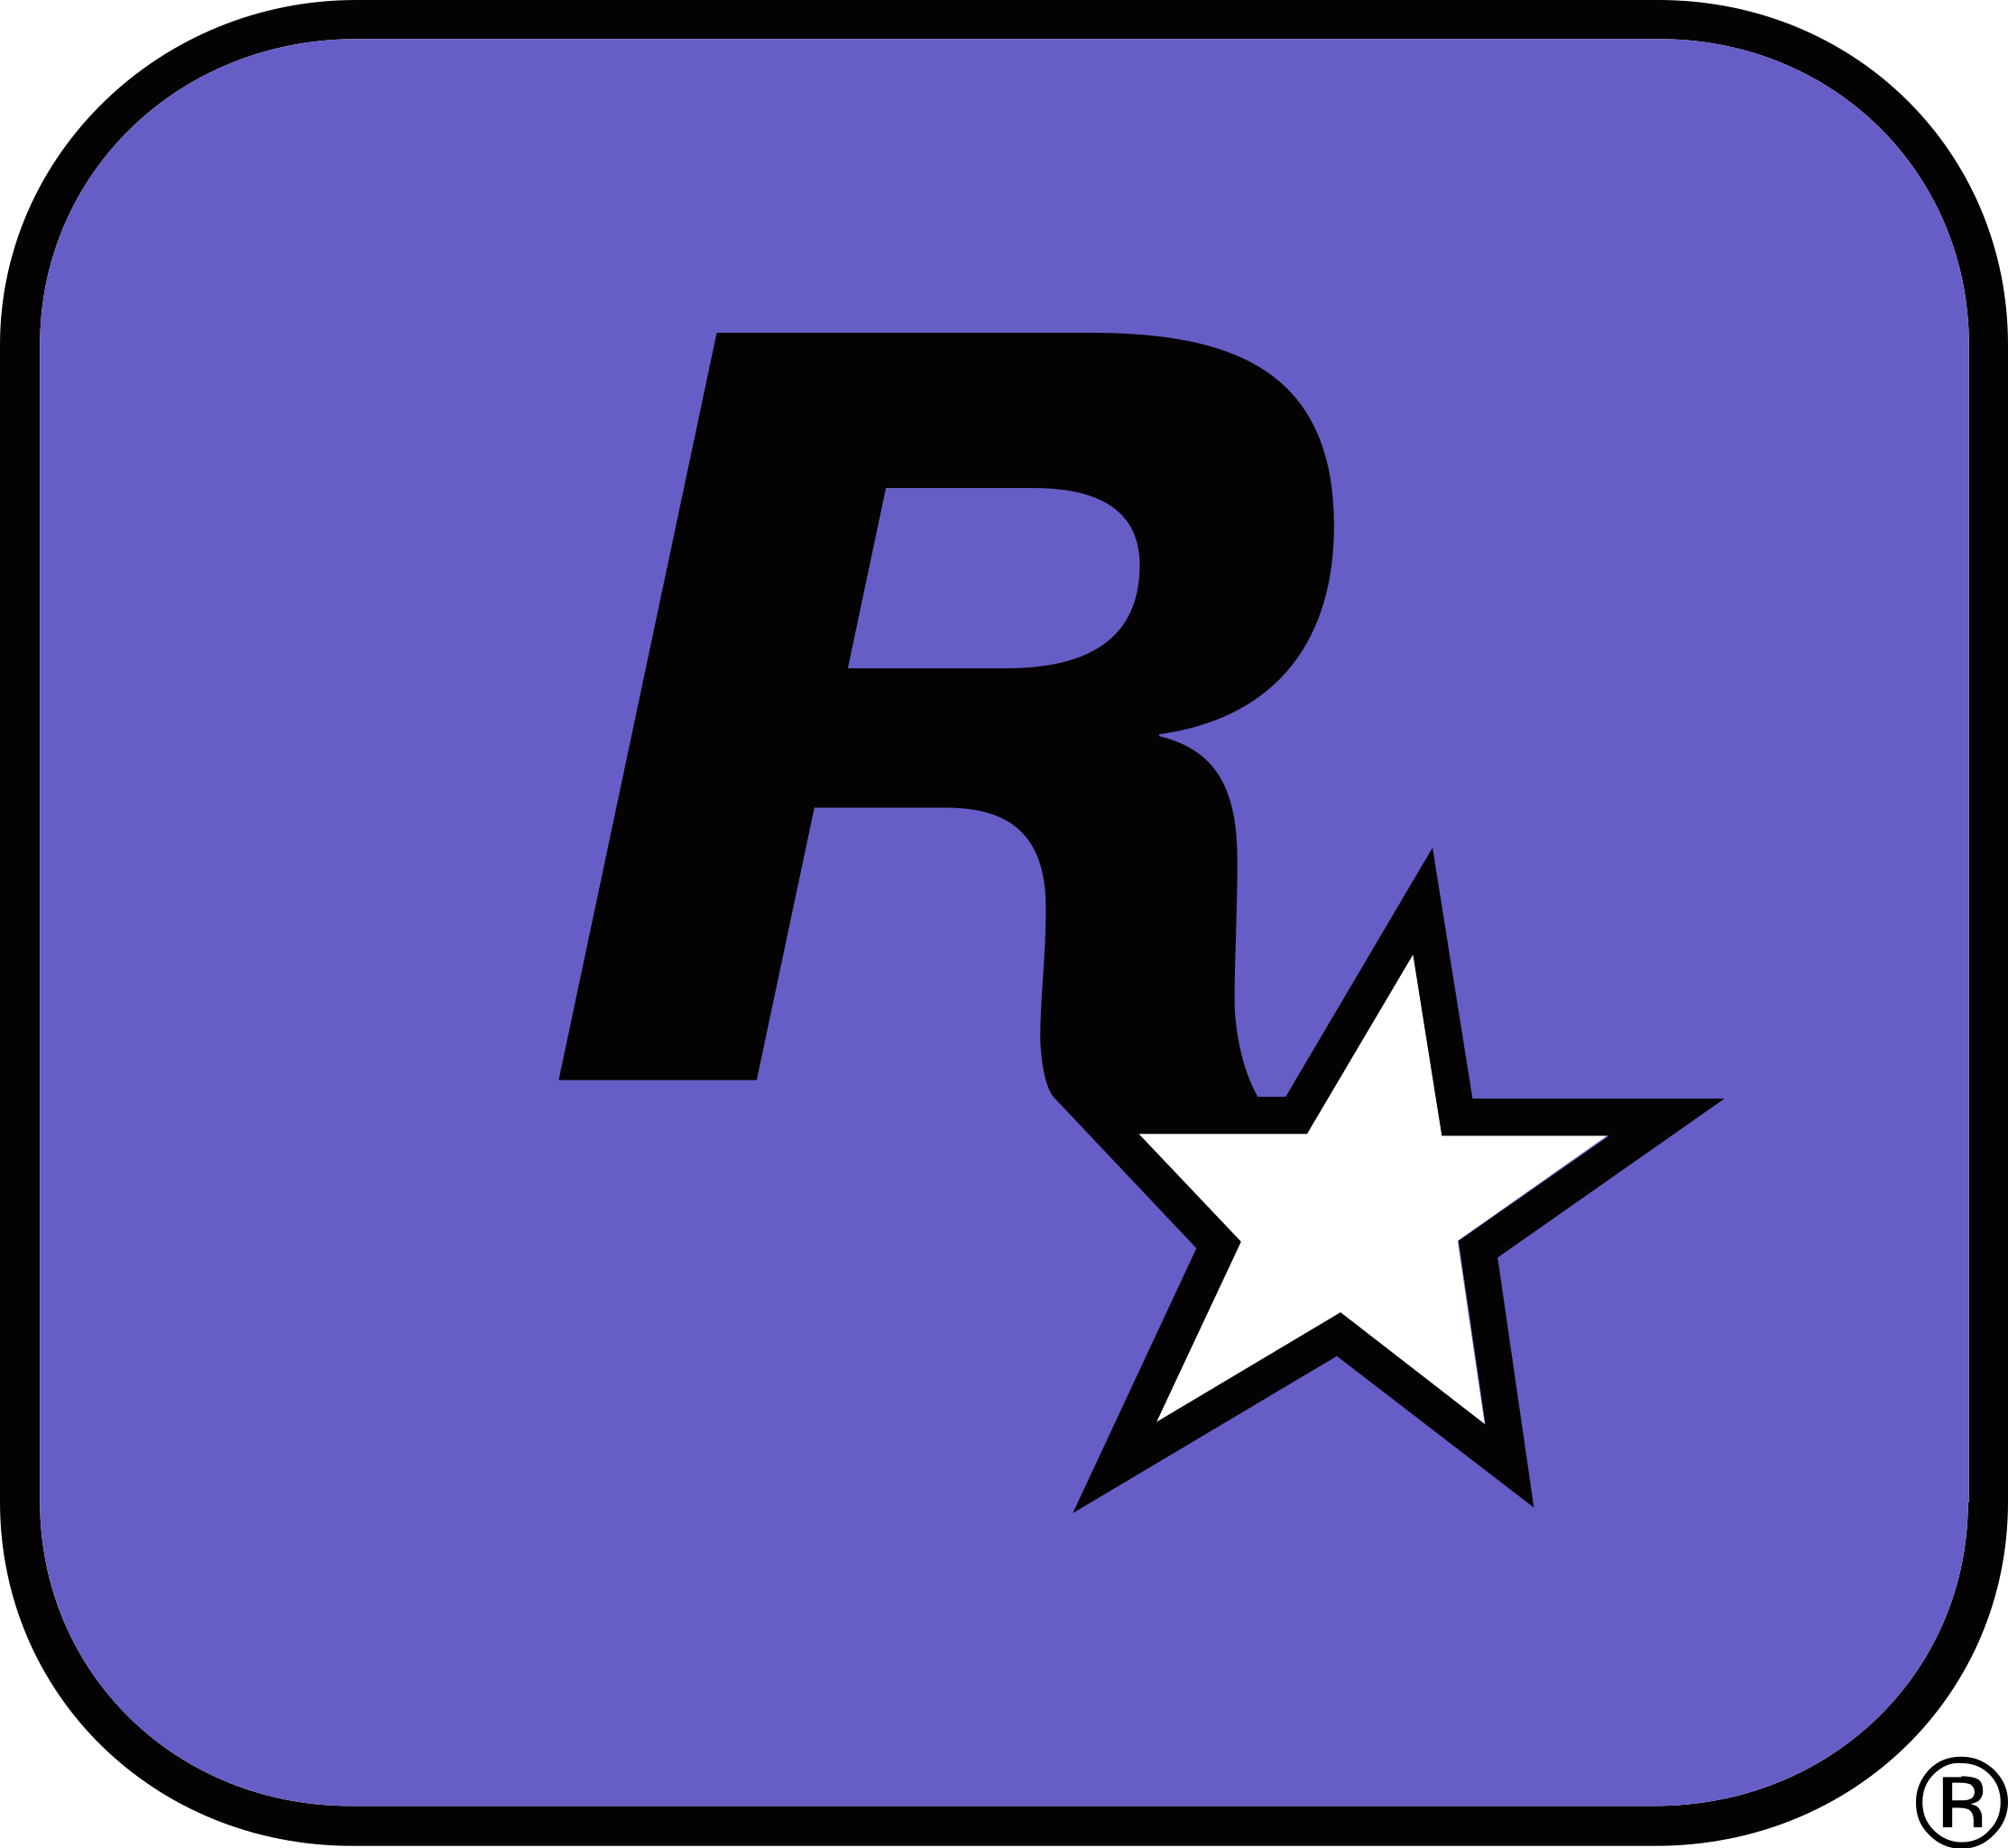 File:Grand Theft Auto III logo.svg - Wikimedia Commons